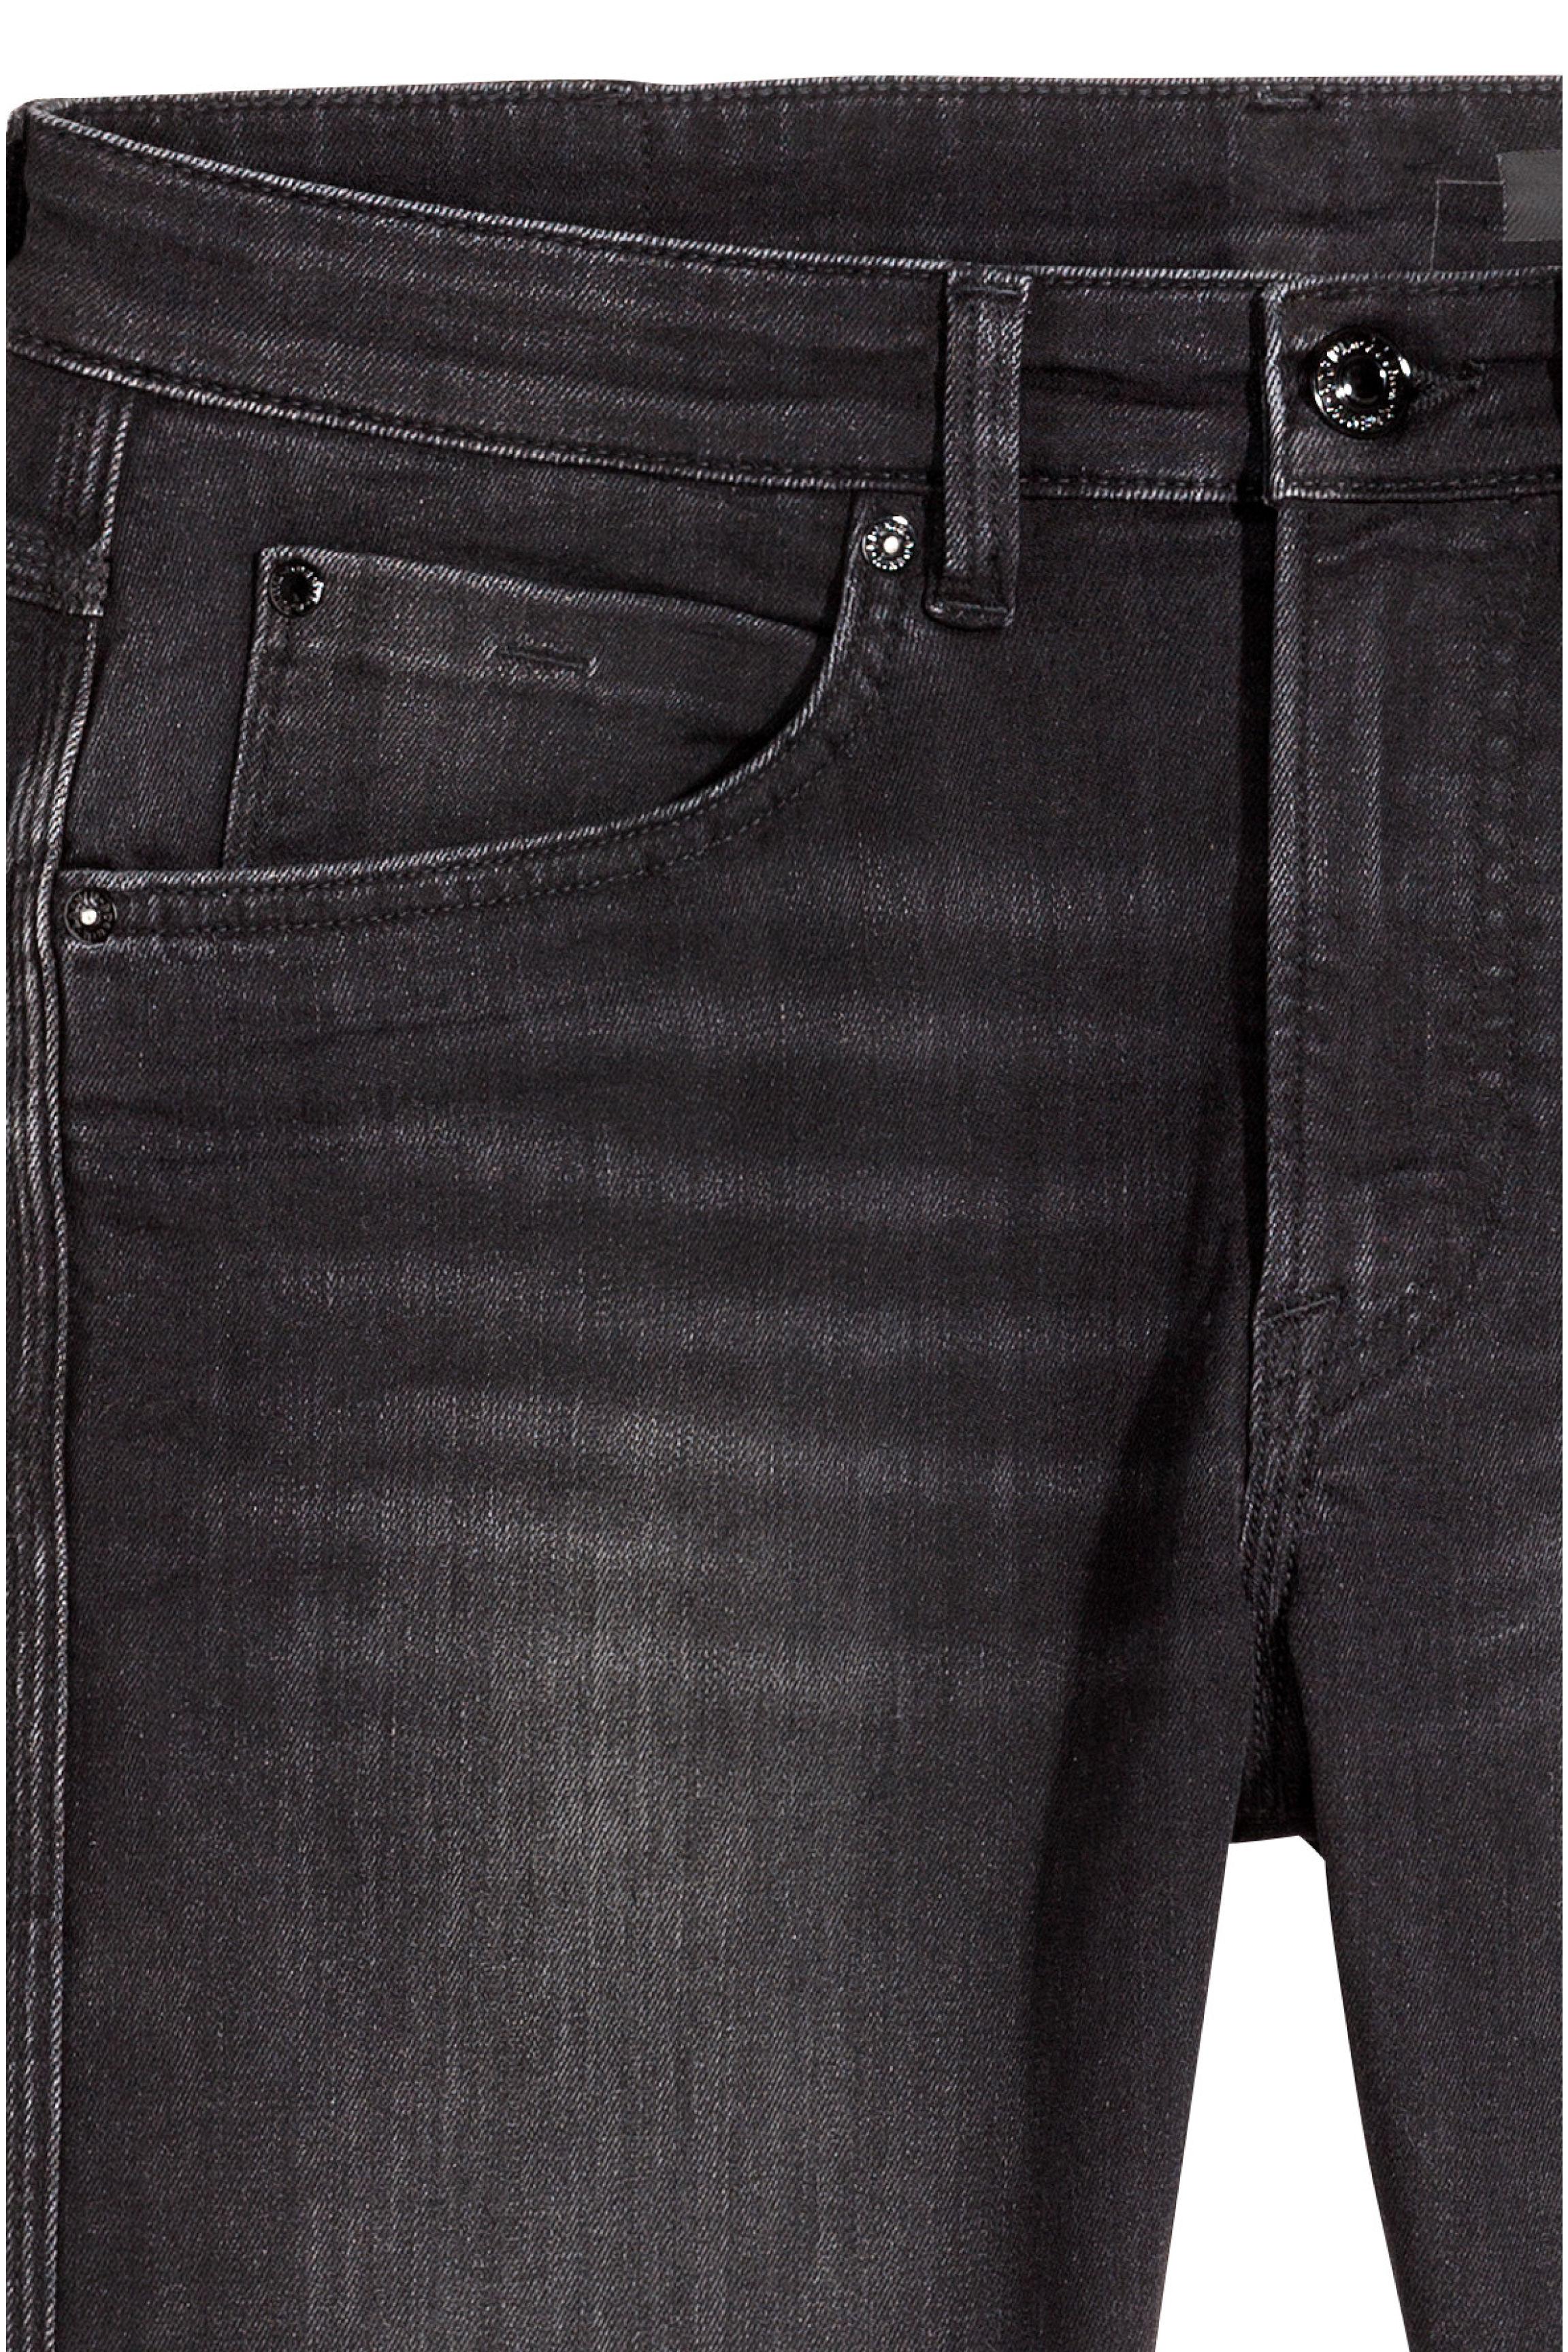 H&M Denim Tech Stretch Skinny Jeans in Black/Washed (Black) for Men - Lyst